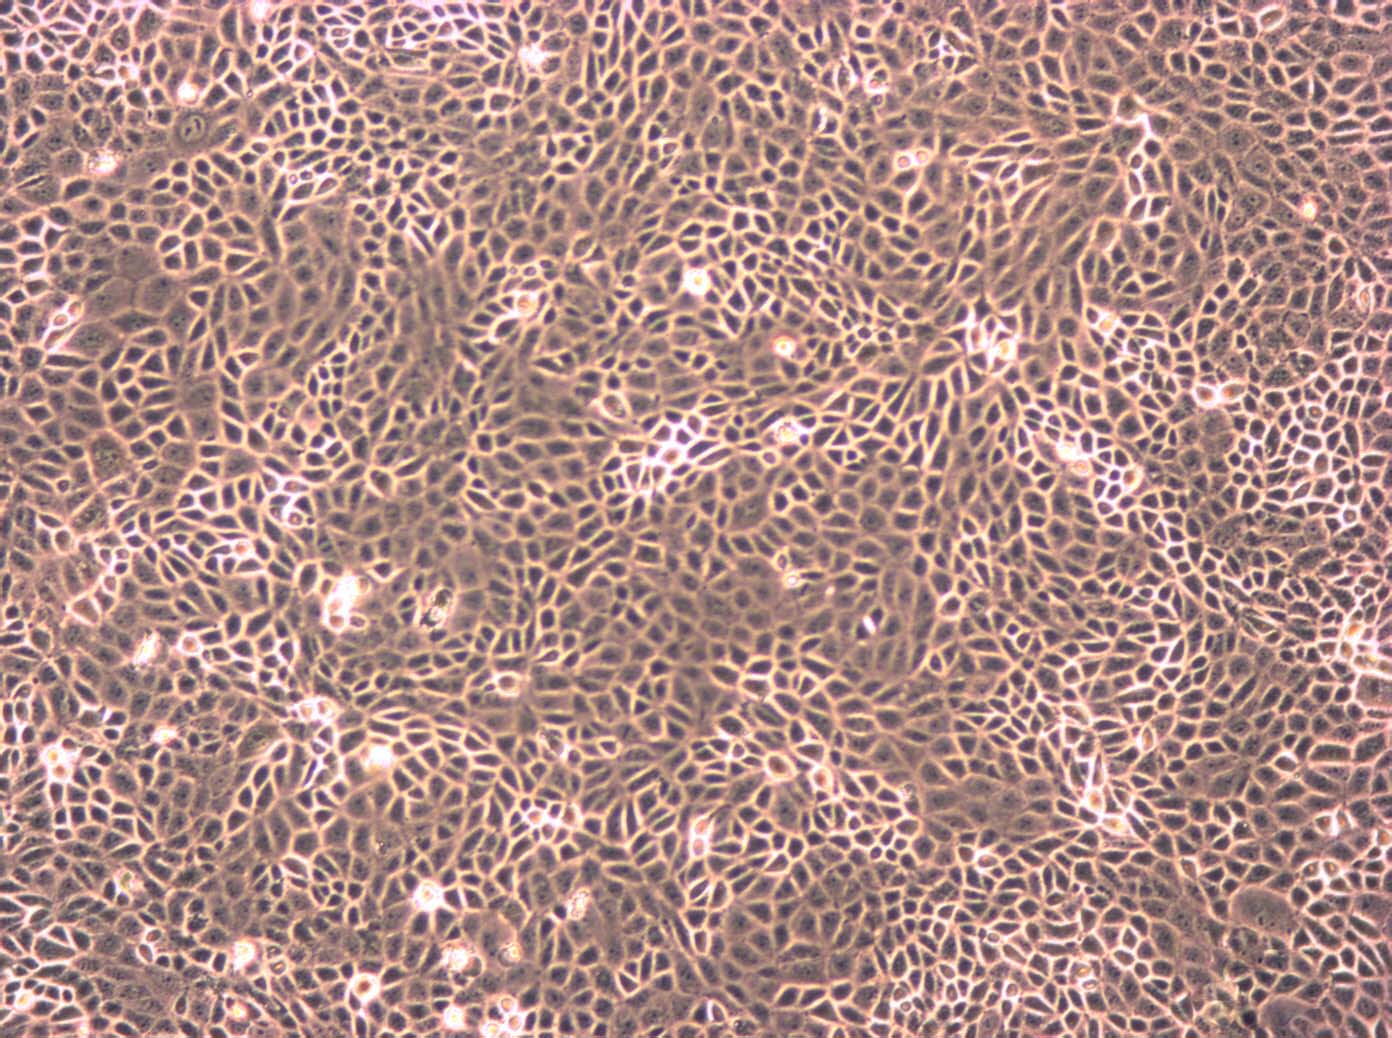 KOSC-2 Cells|人口腔鳞状癌细胞系,KOSC-2 Cells